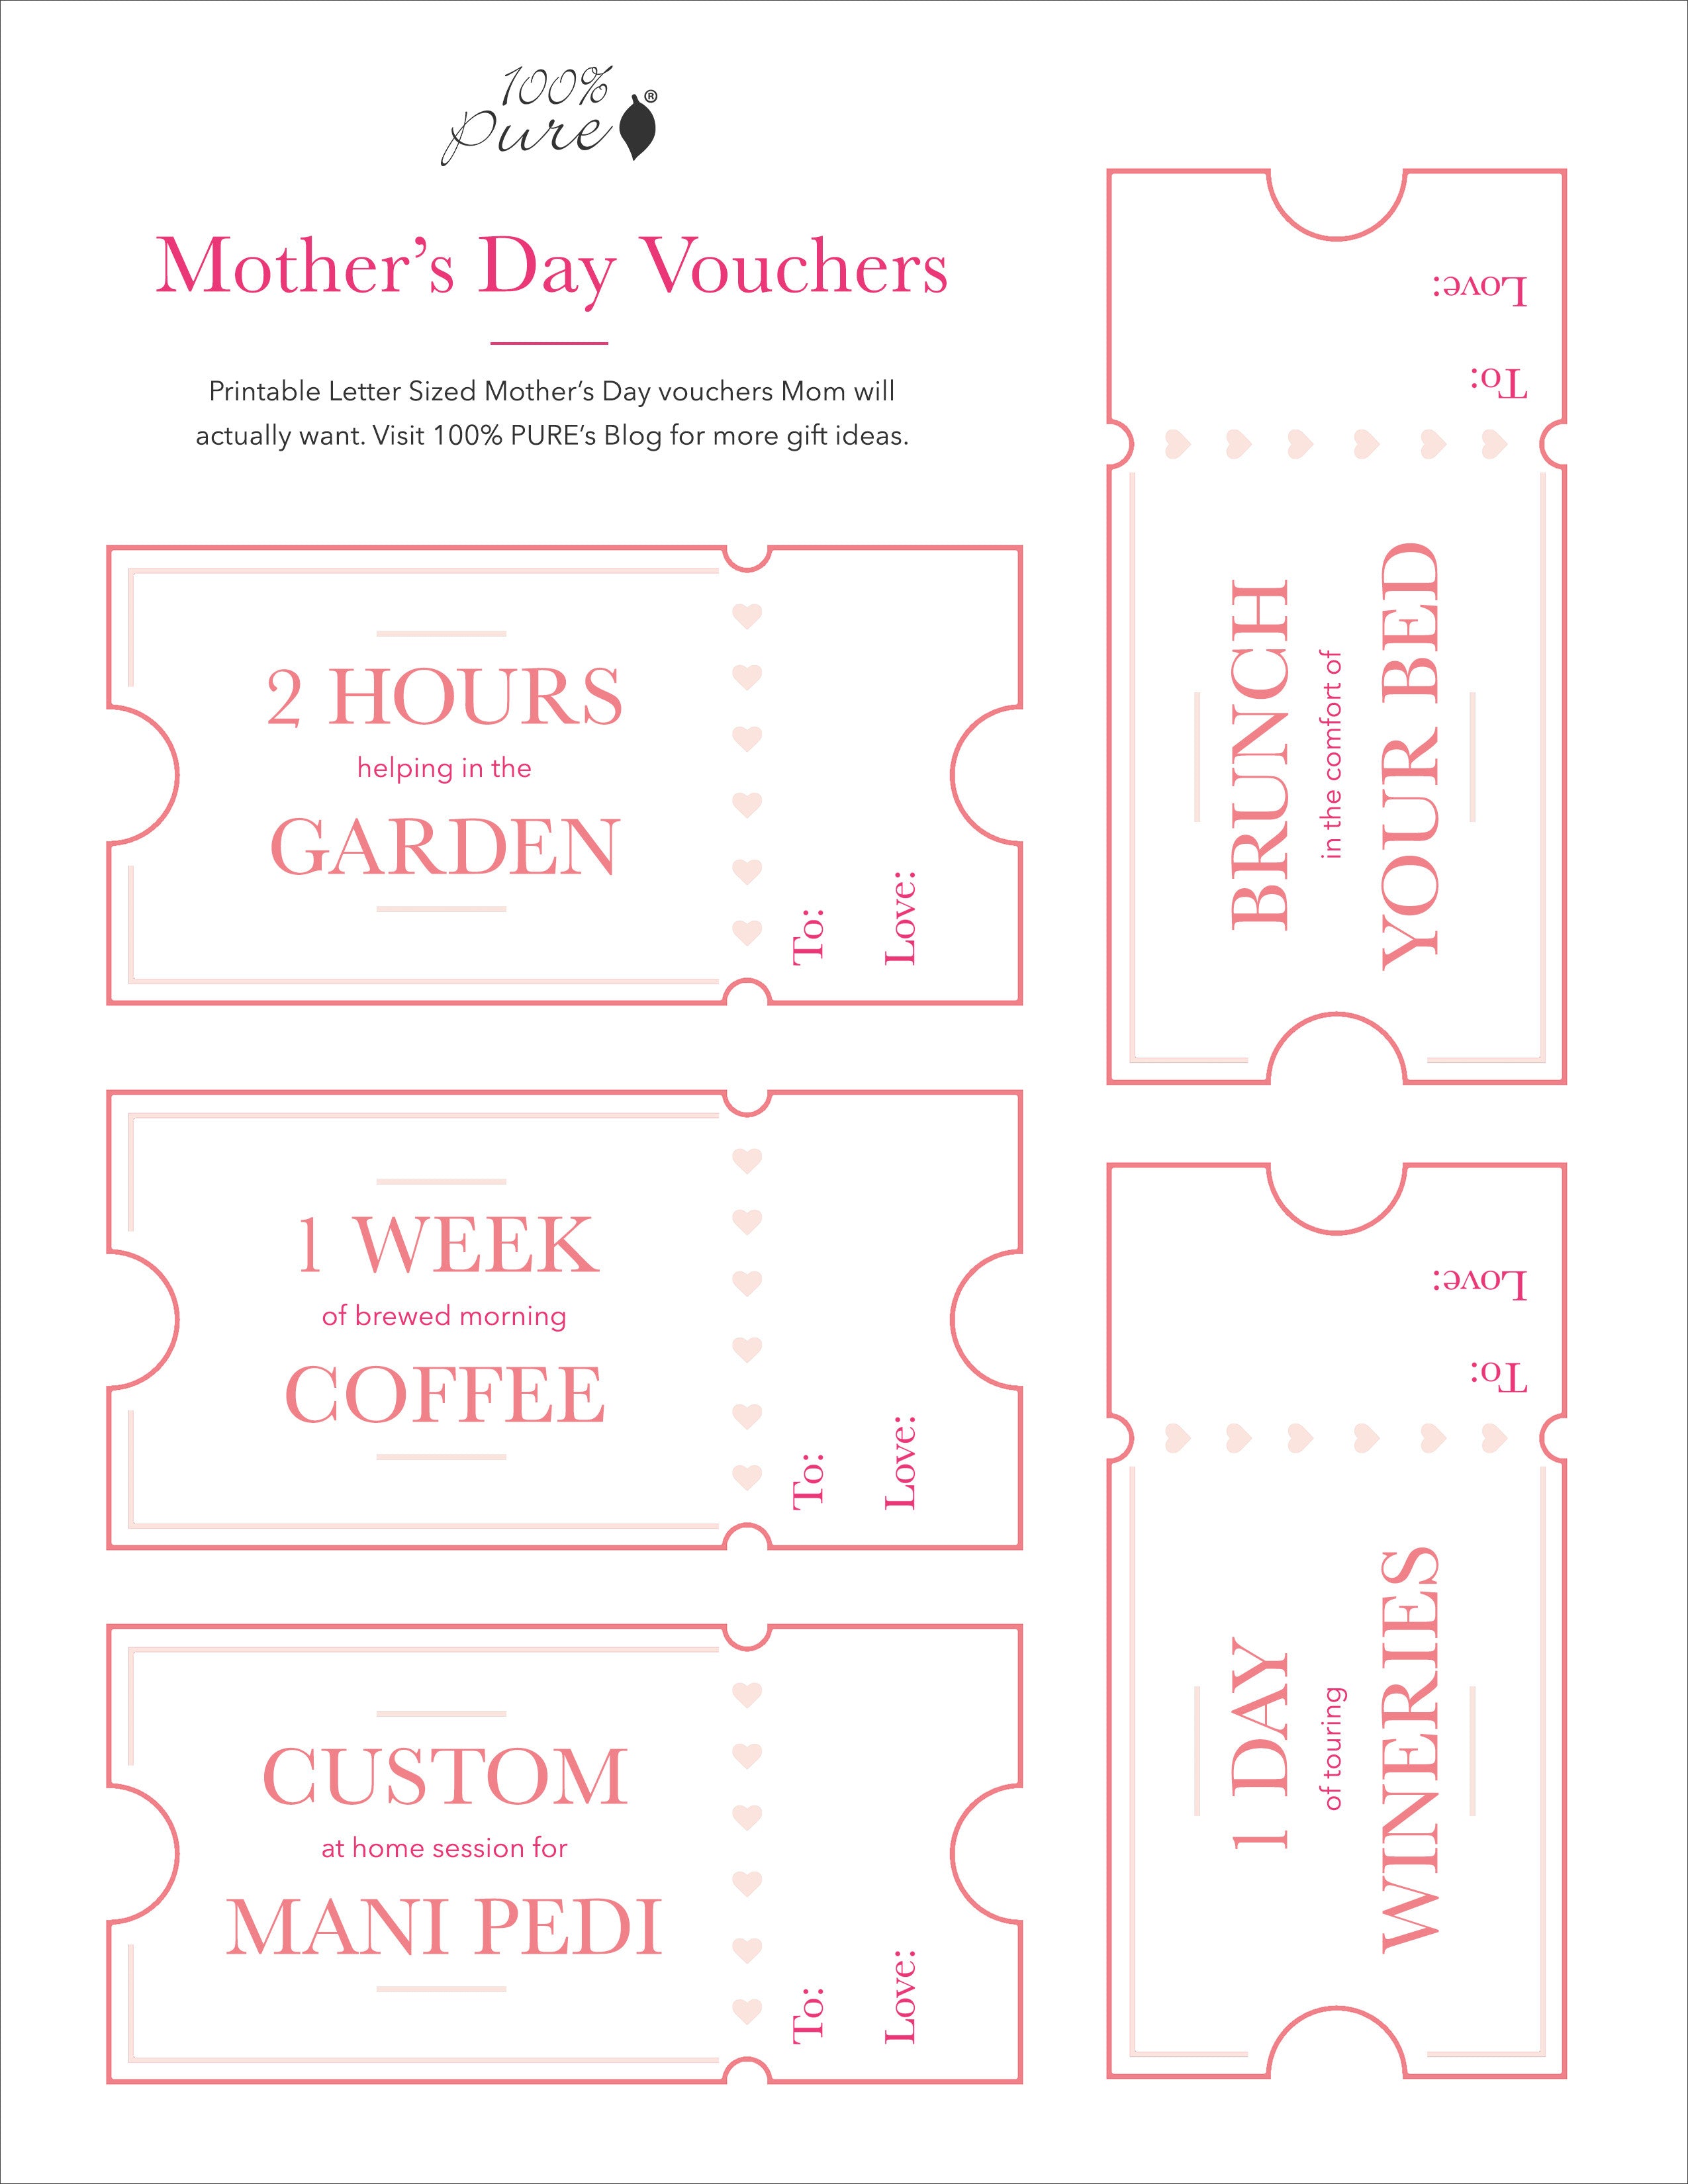 Mothers Day coupon printout